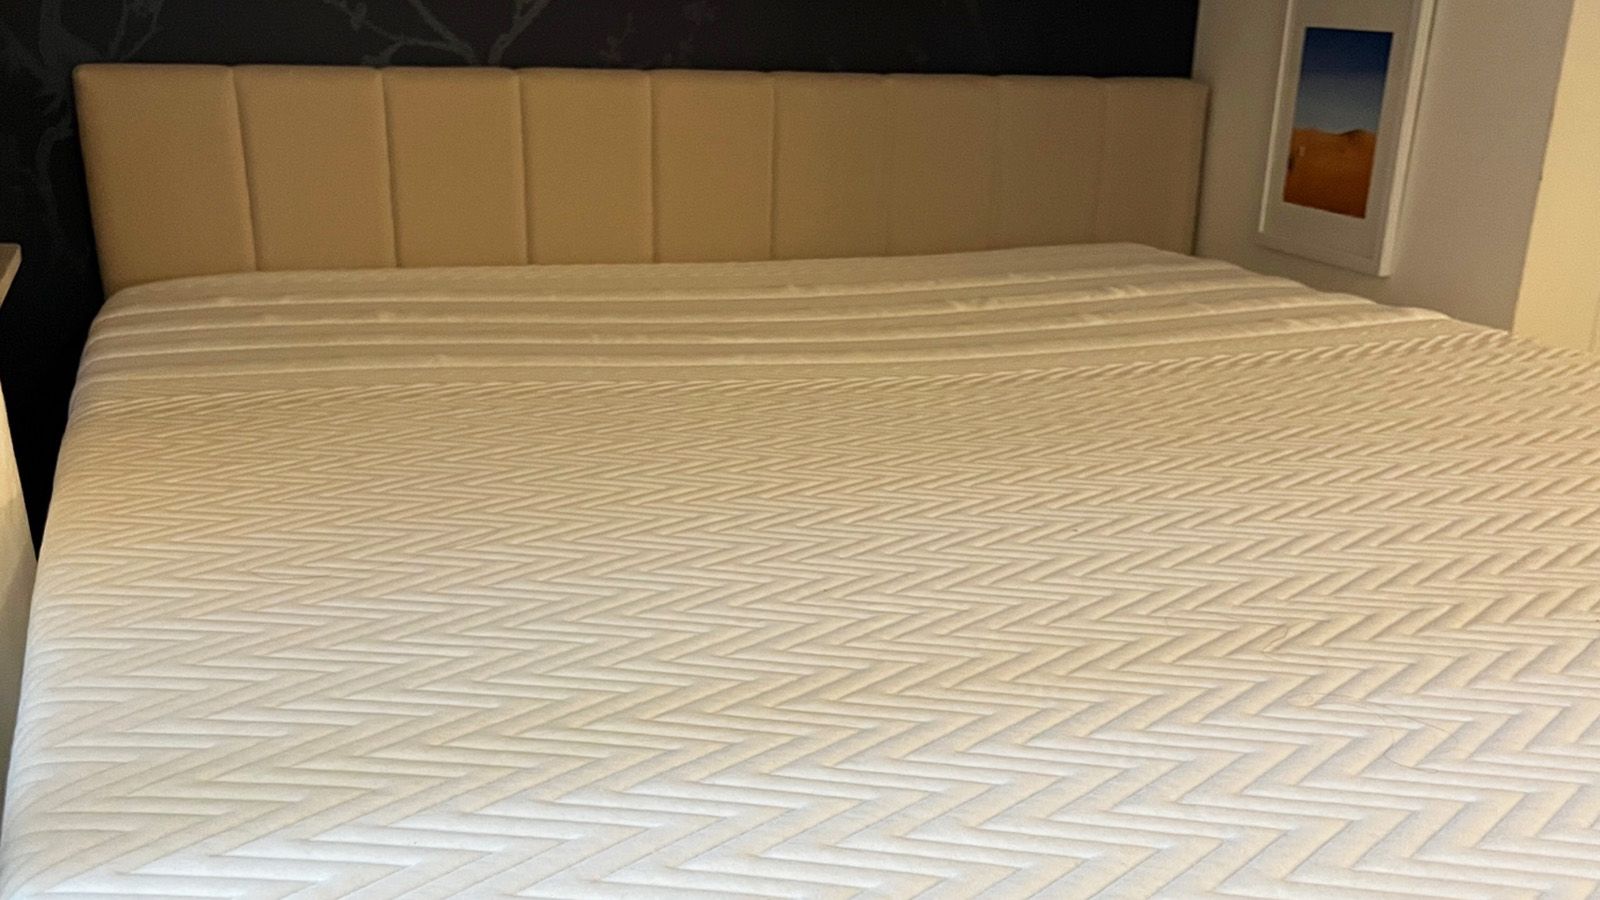 Leesa Legend Hybrid Mattress in bedroom